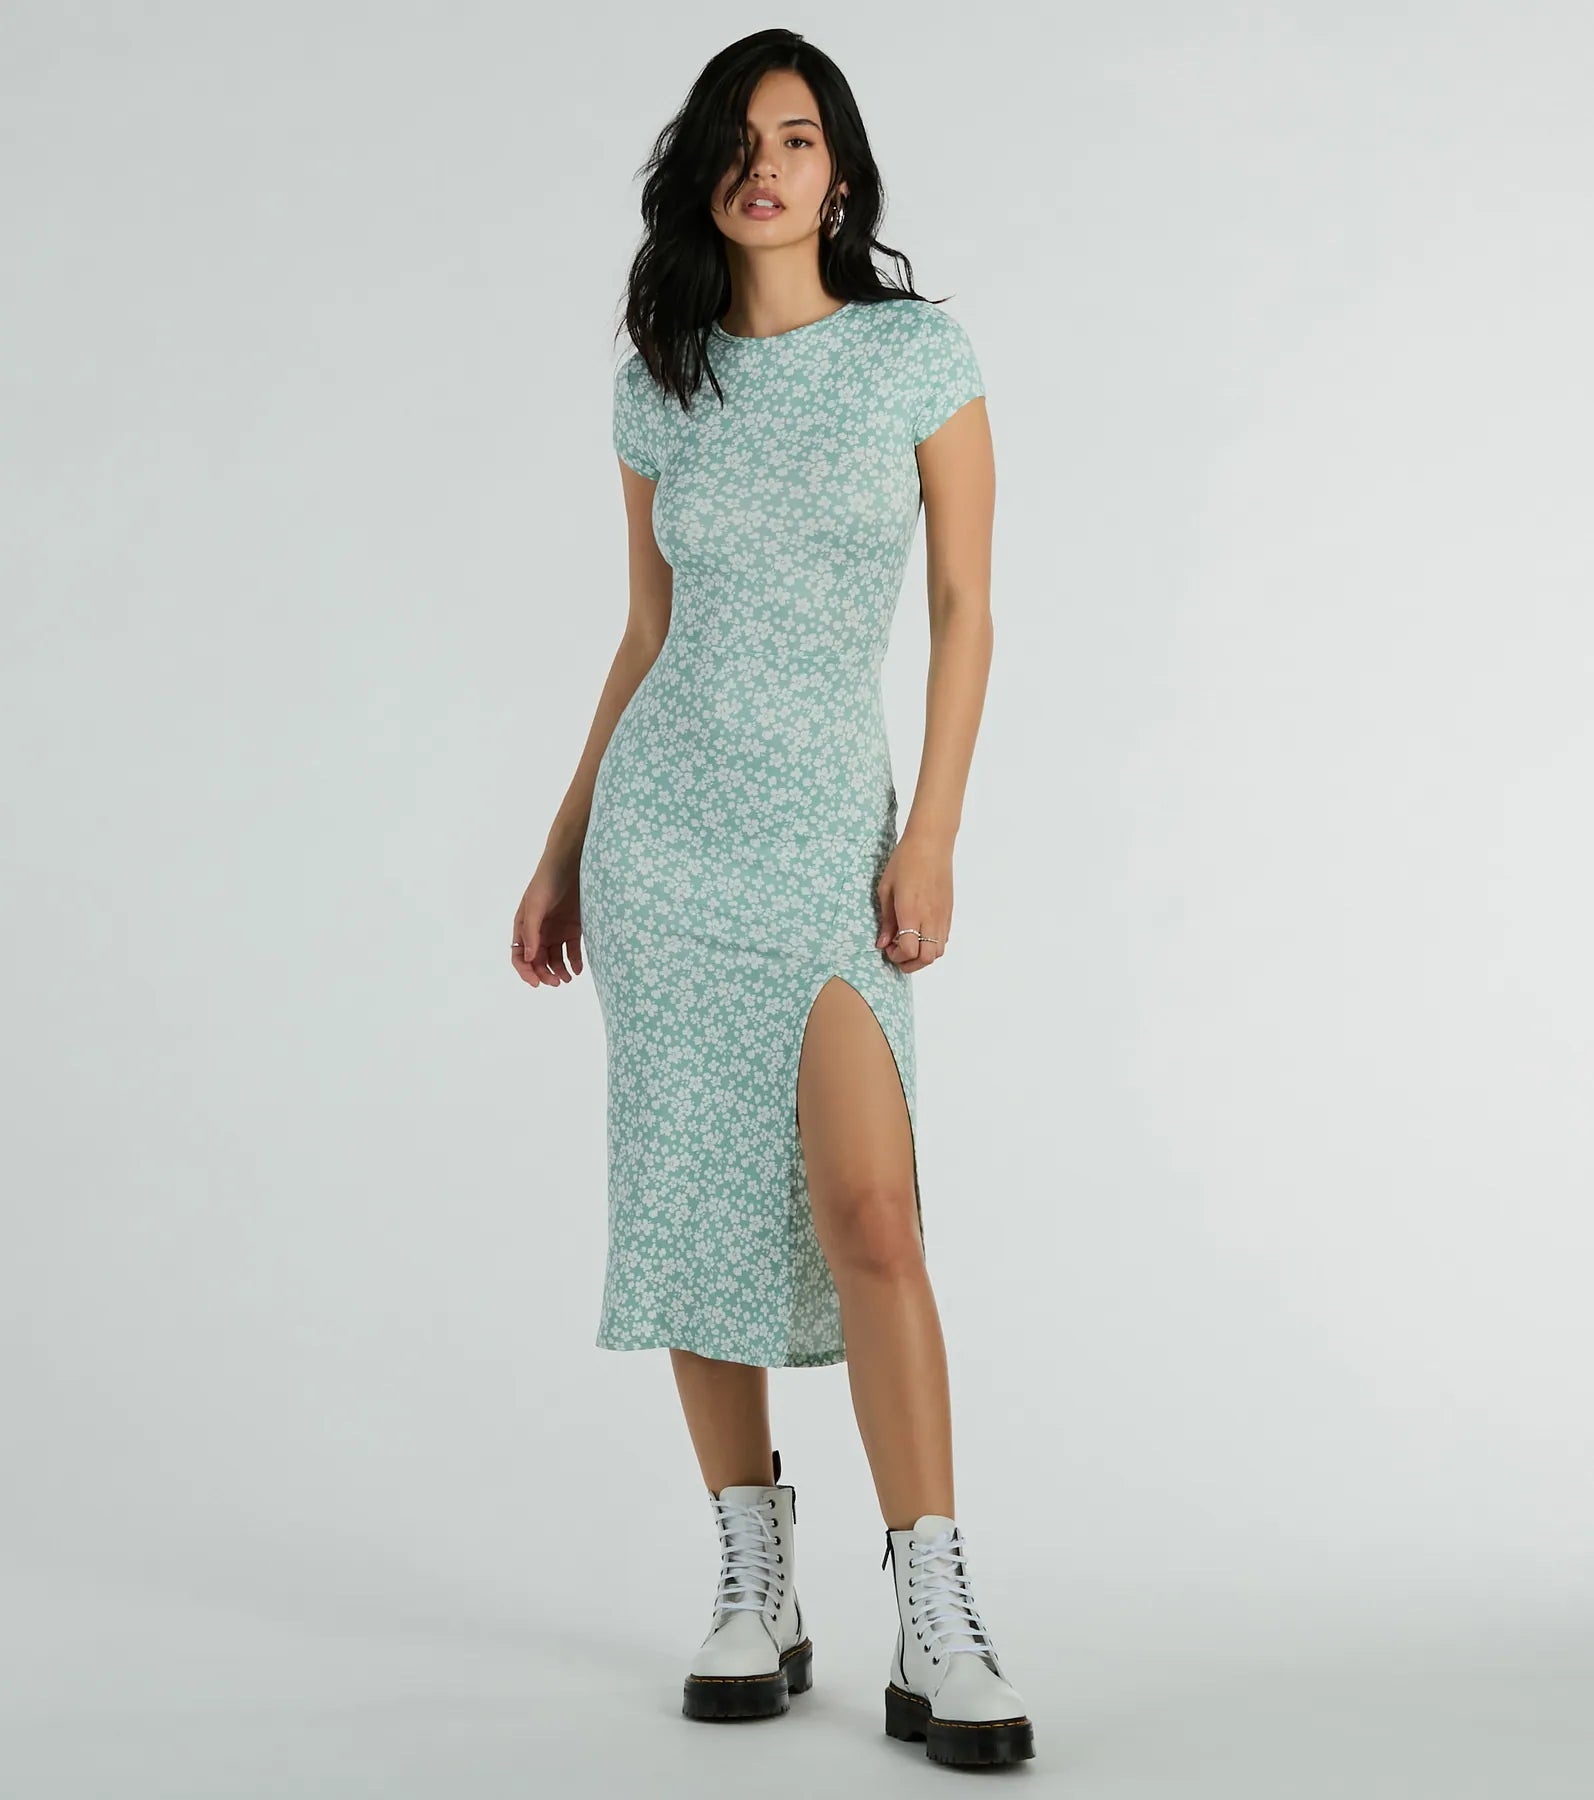 Crew Neck Floral Print Spring Knit Stretchy Slit Cutout Short Sleeves Sleeves Bodycon Dress/Midi Dress